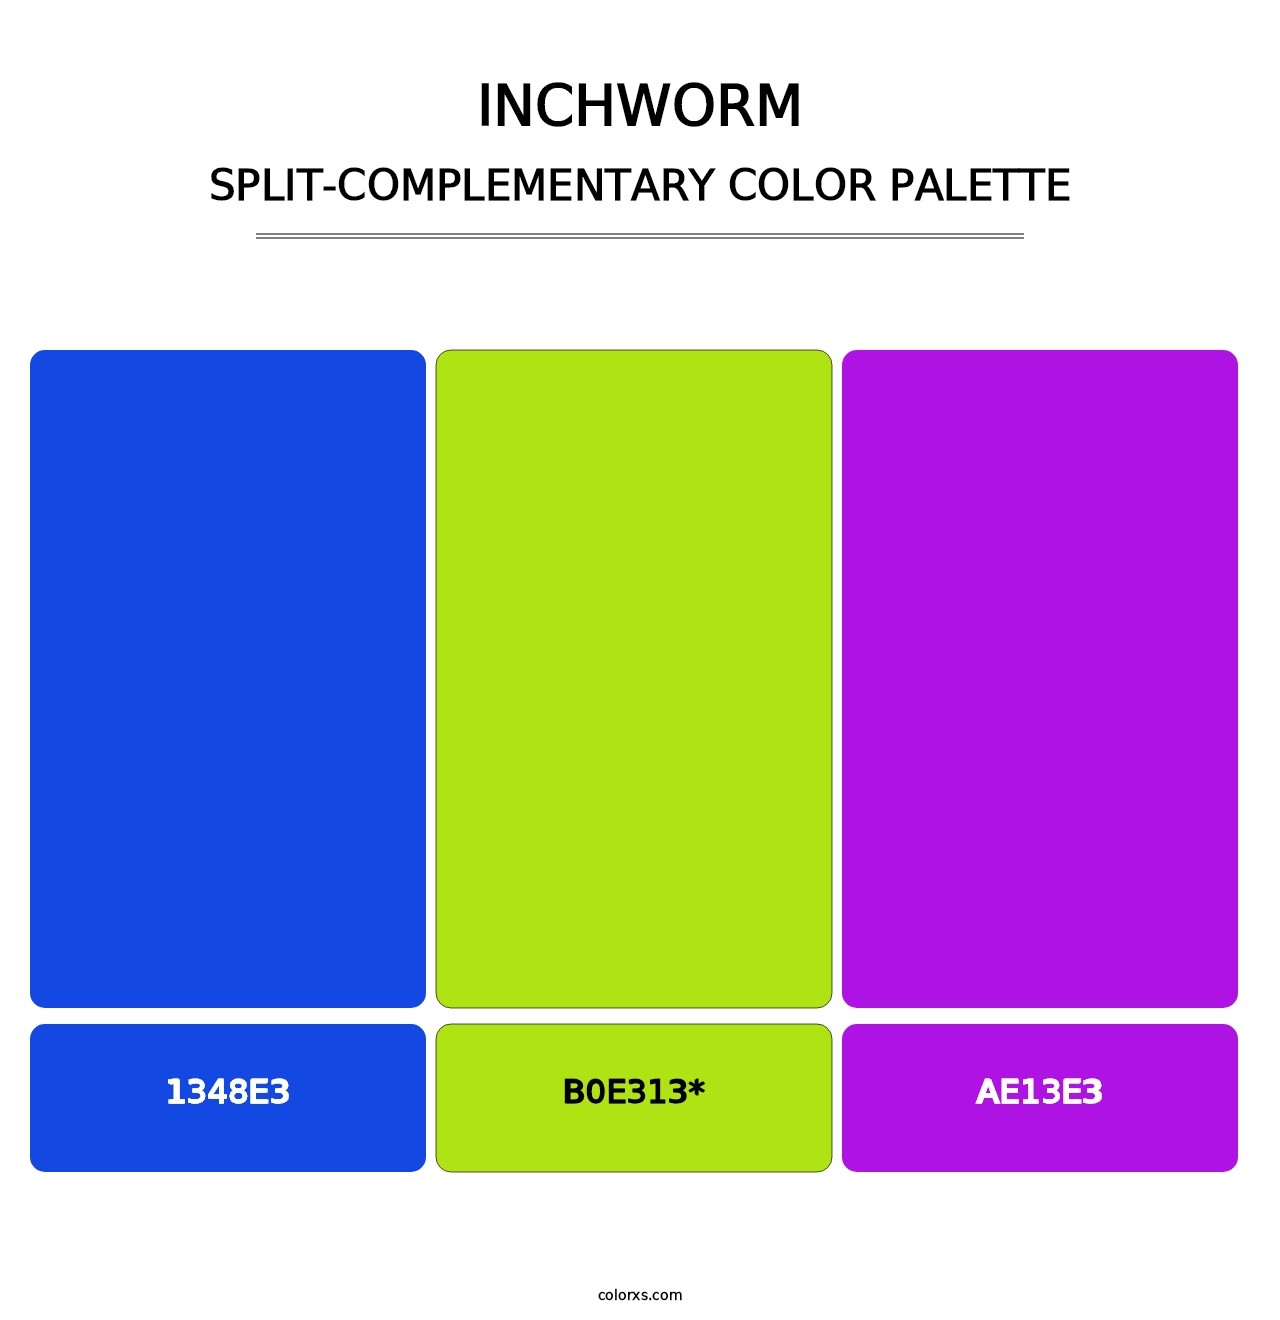 Inchworm - Split-Complementary Color Palette